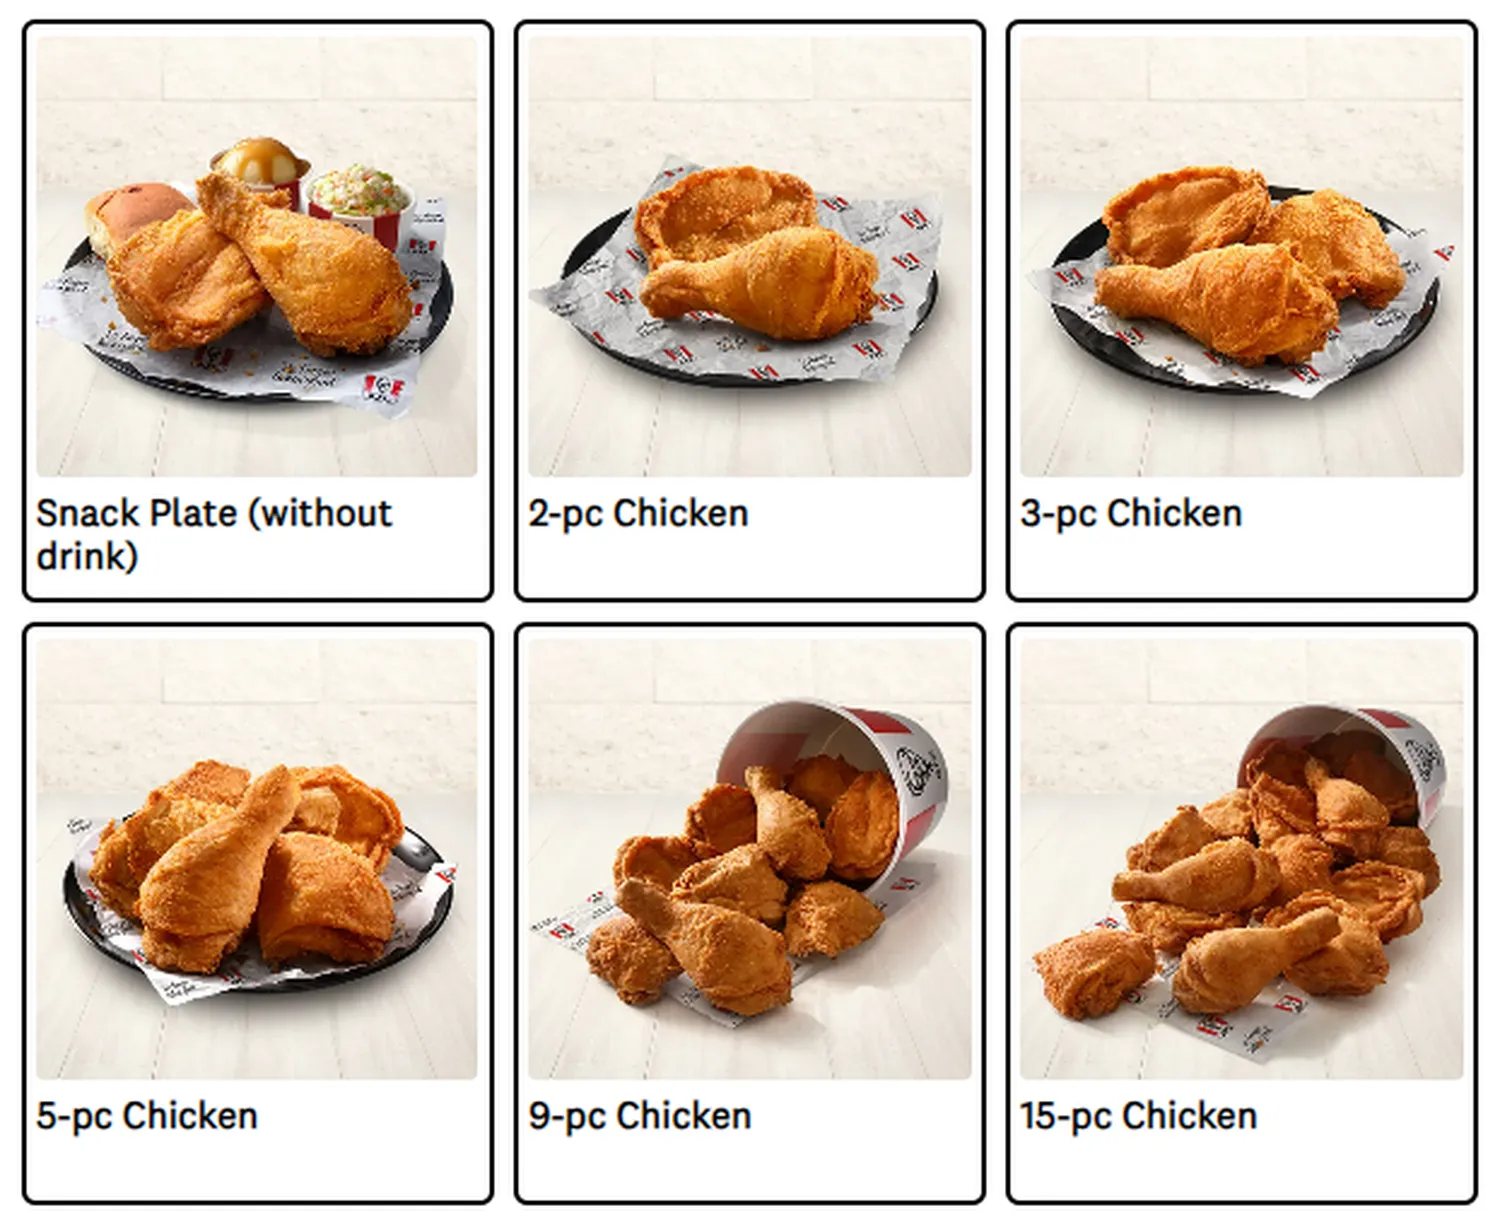 kfc menu malaysia chicken 2